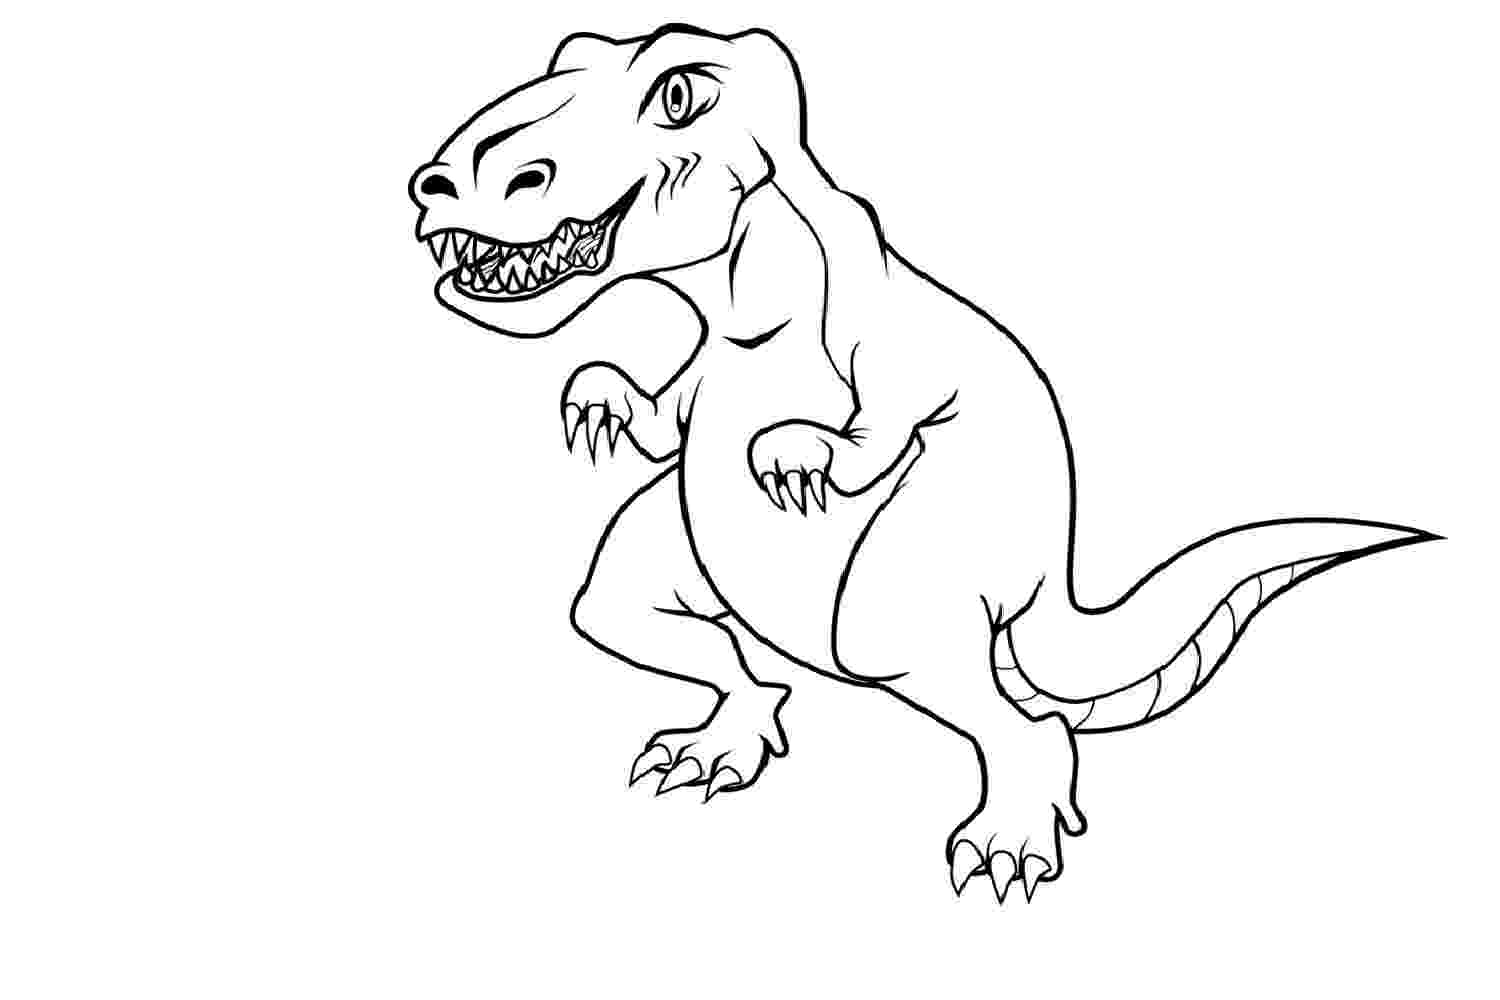 free printable dinosaur pictures free printable dinosaur coloring pages for kids pictures dinosaur printable free 